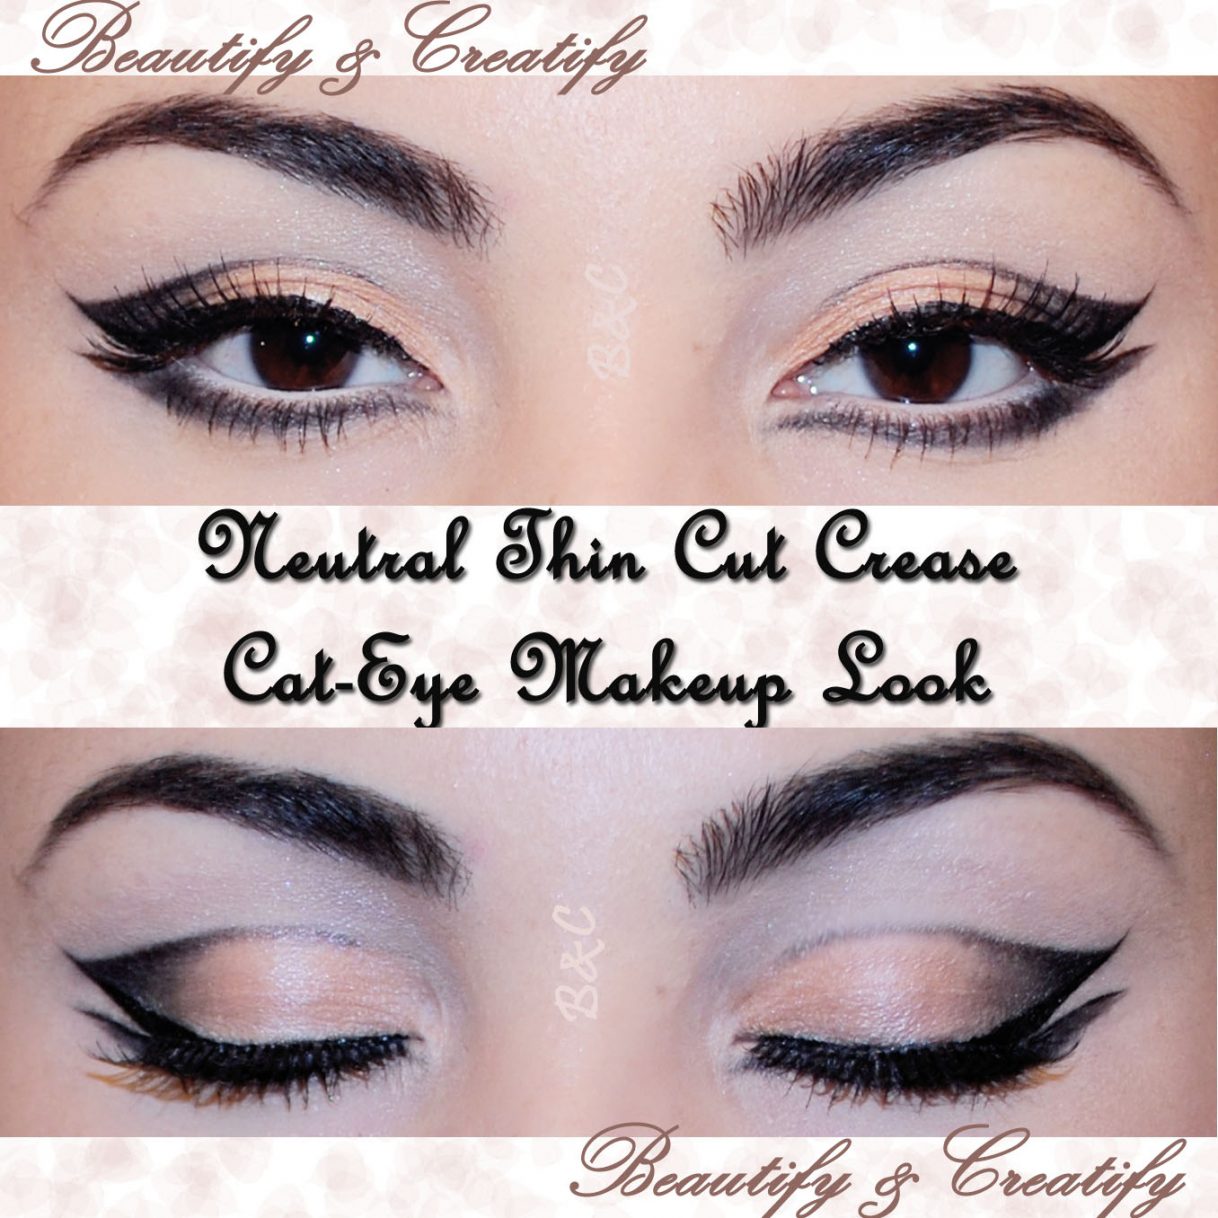 How To Do Cat Eye Makeup Neutral Thin Cut Crease Cat Eye Makeup Look